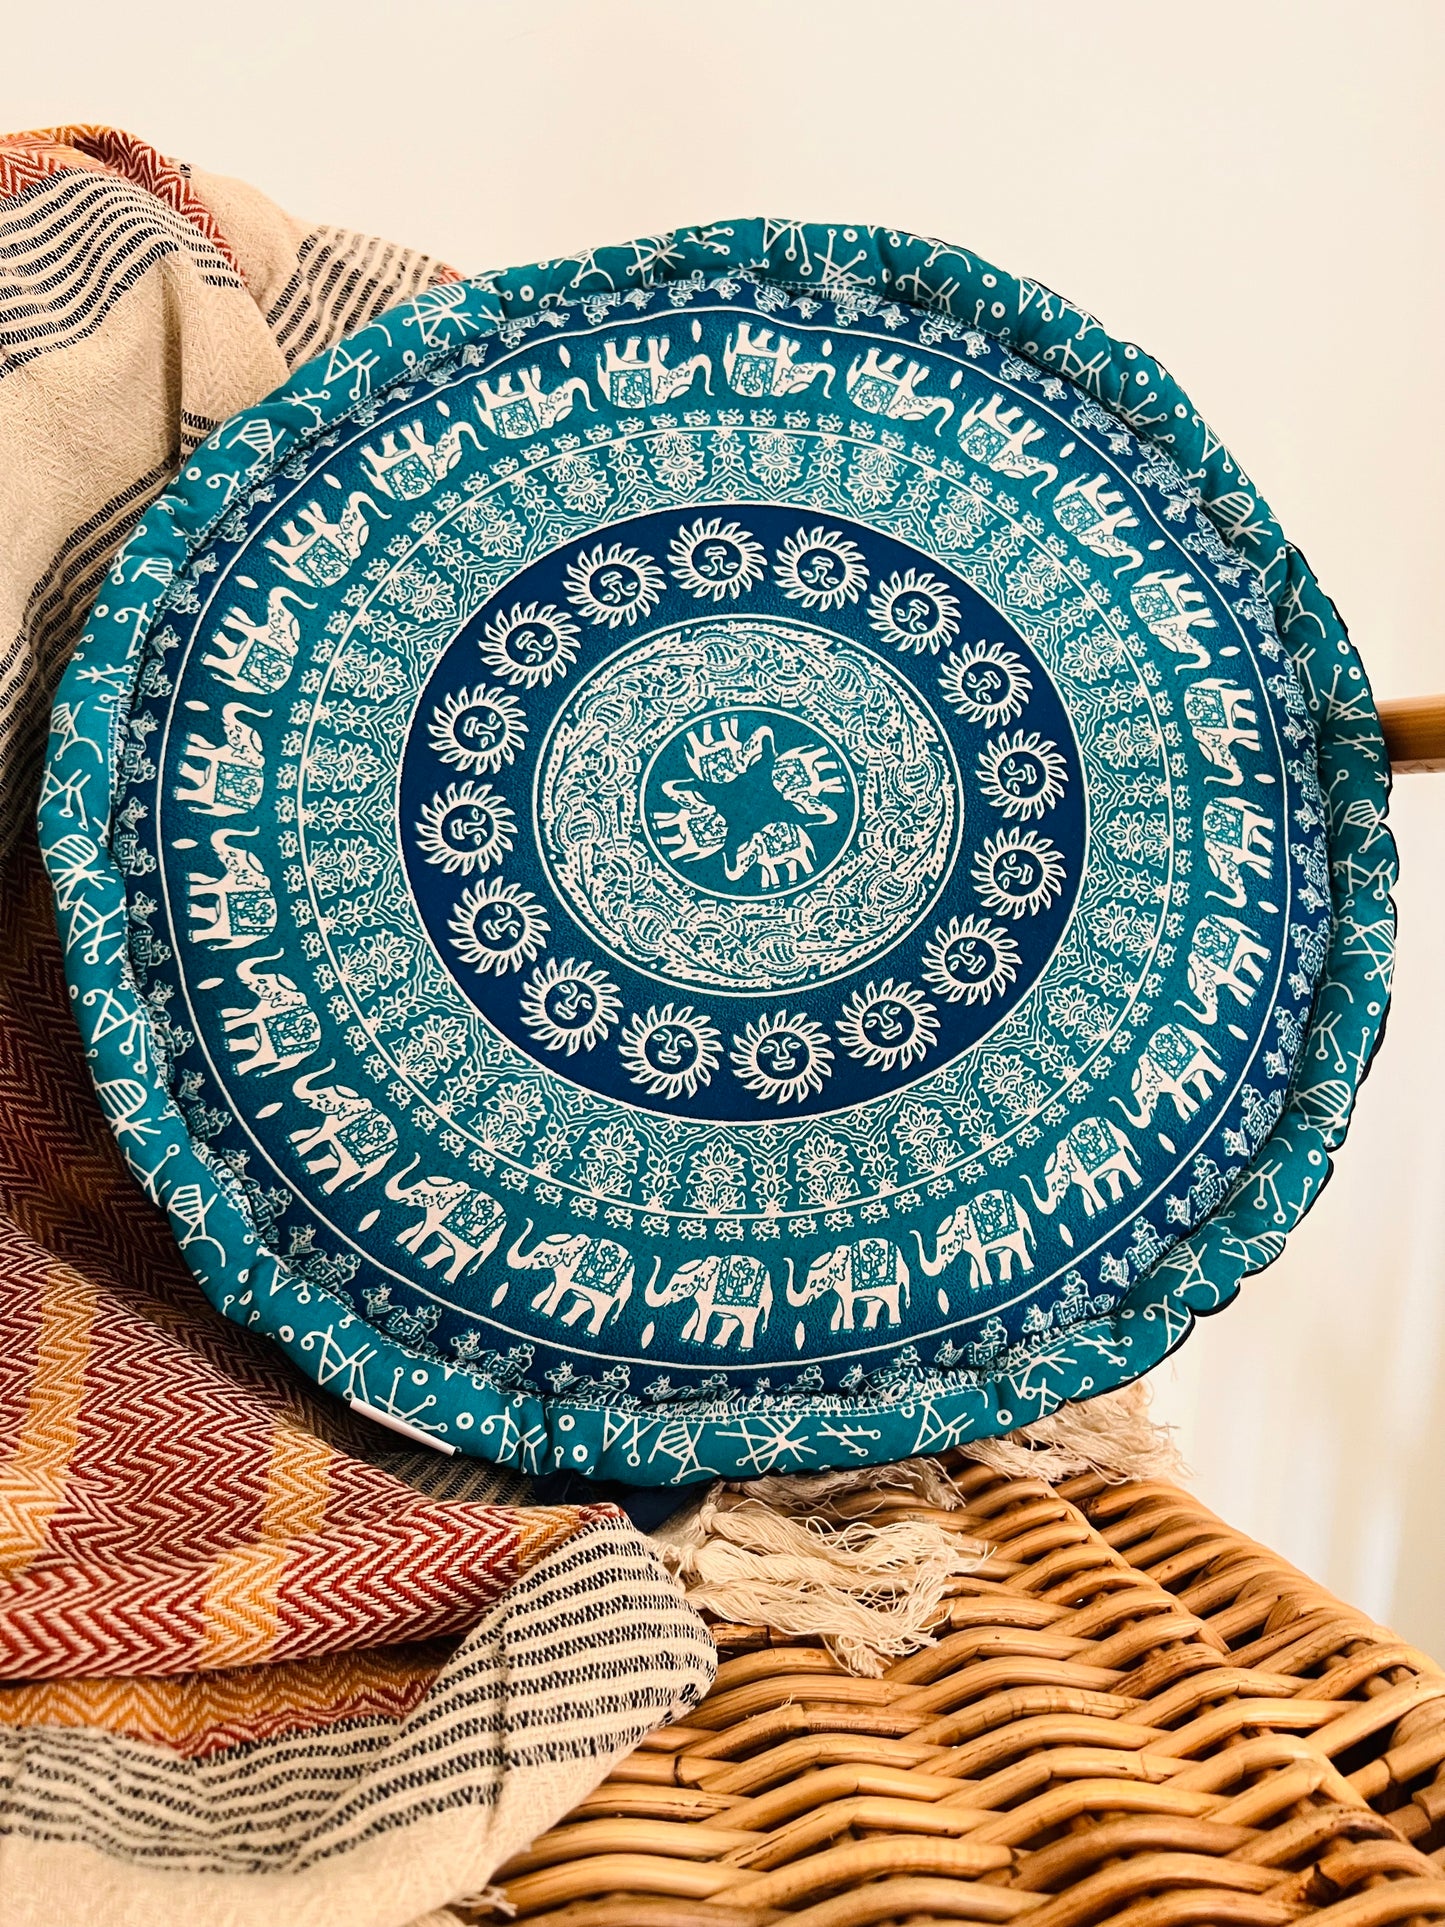 Handmade, Fair Trade, Large Yoga, Floor Cushion, Mandala Elephant Print, Blue